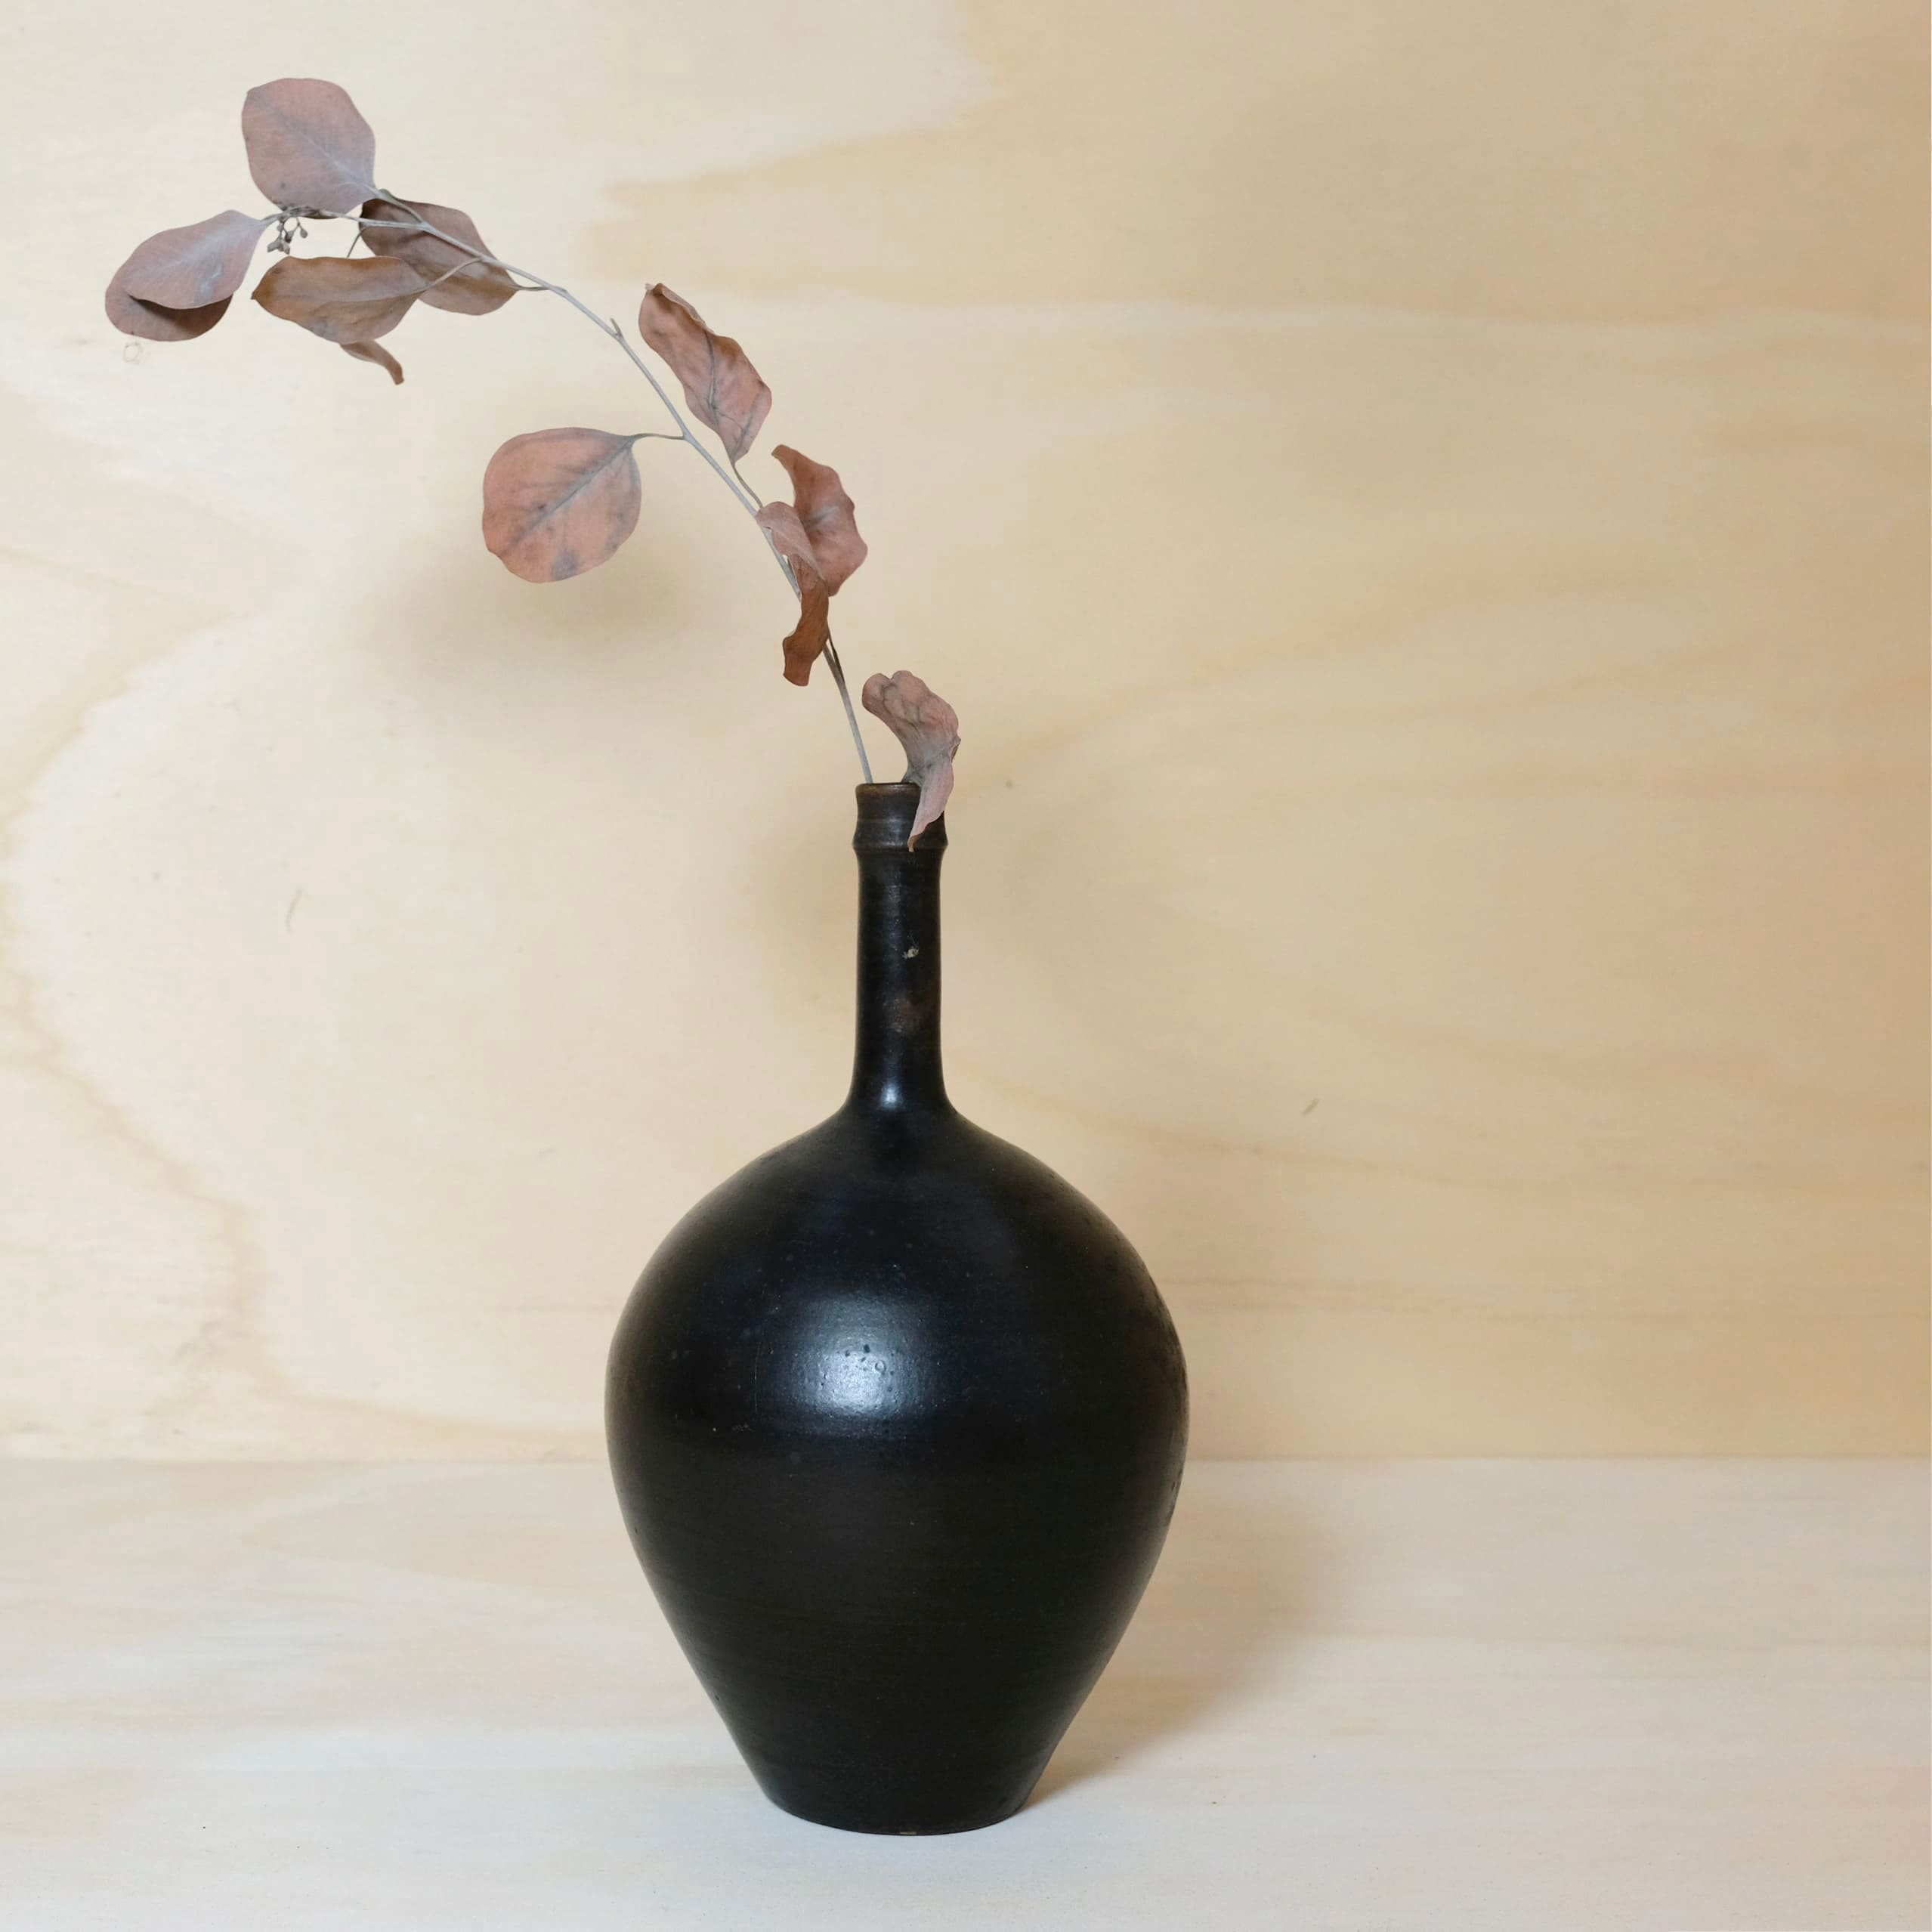 Narrow-necked stoneware vase with a dark glaze.